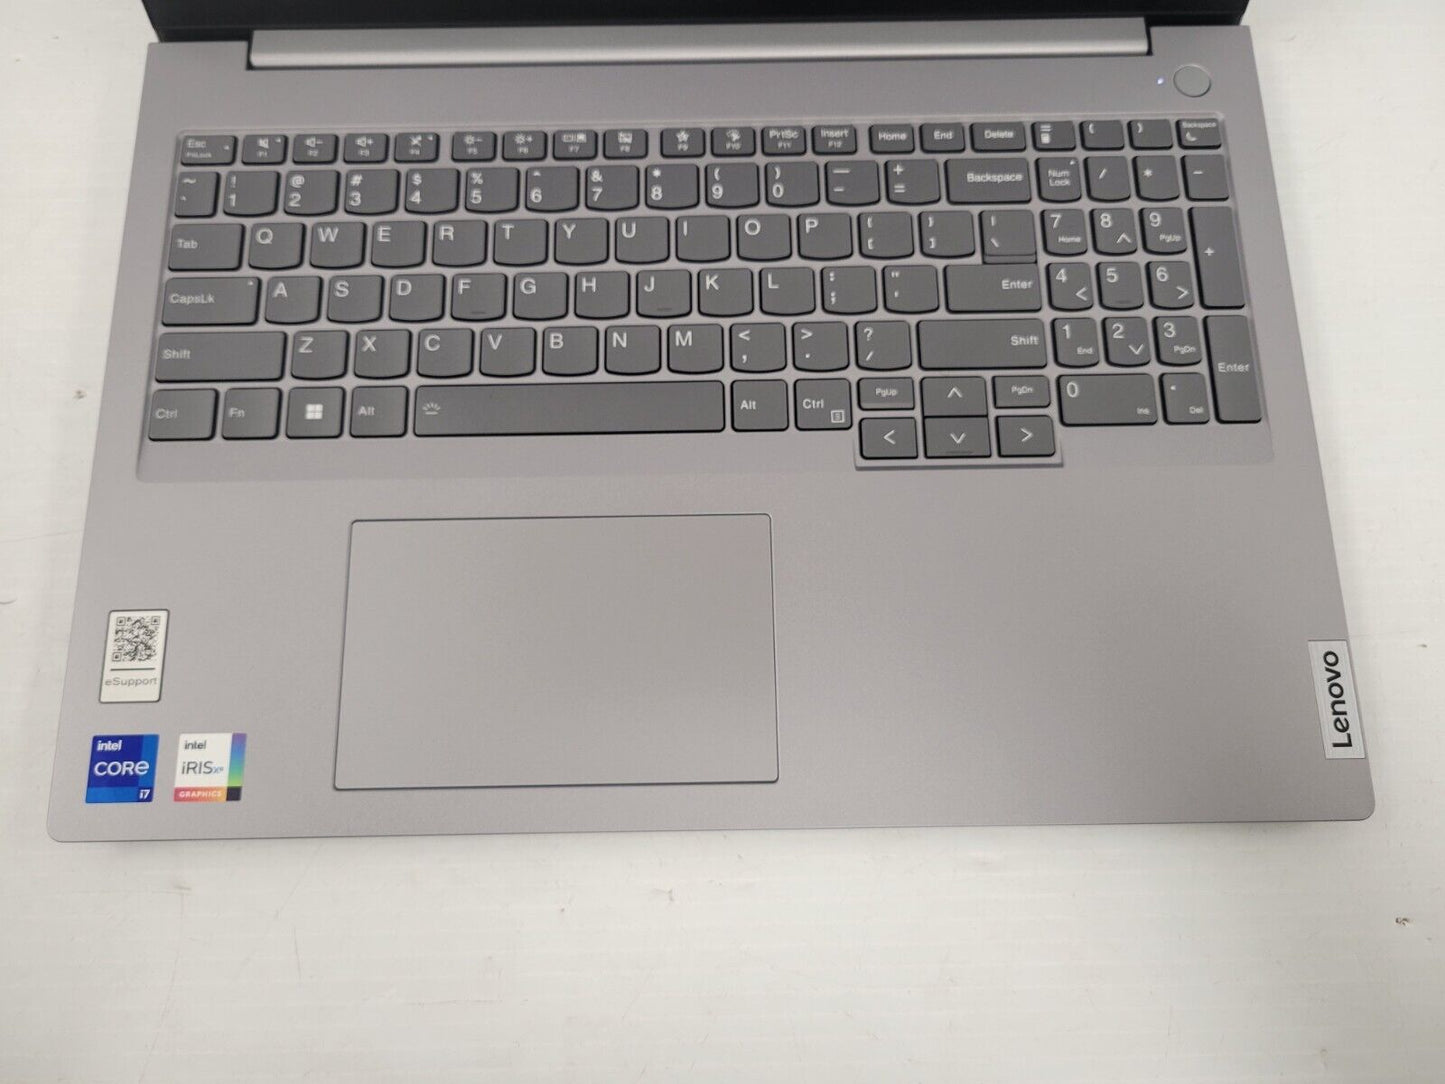 (54519-1) Lenovo Thinkbook 16G81RC Laptop